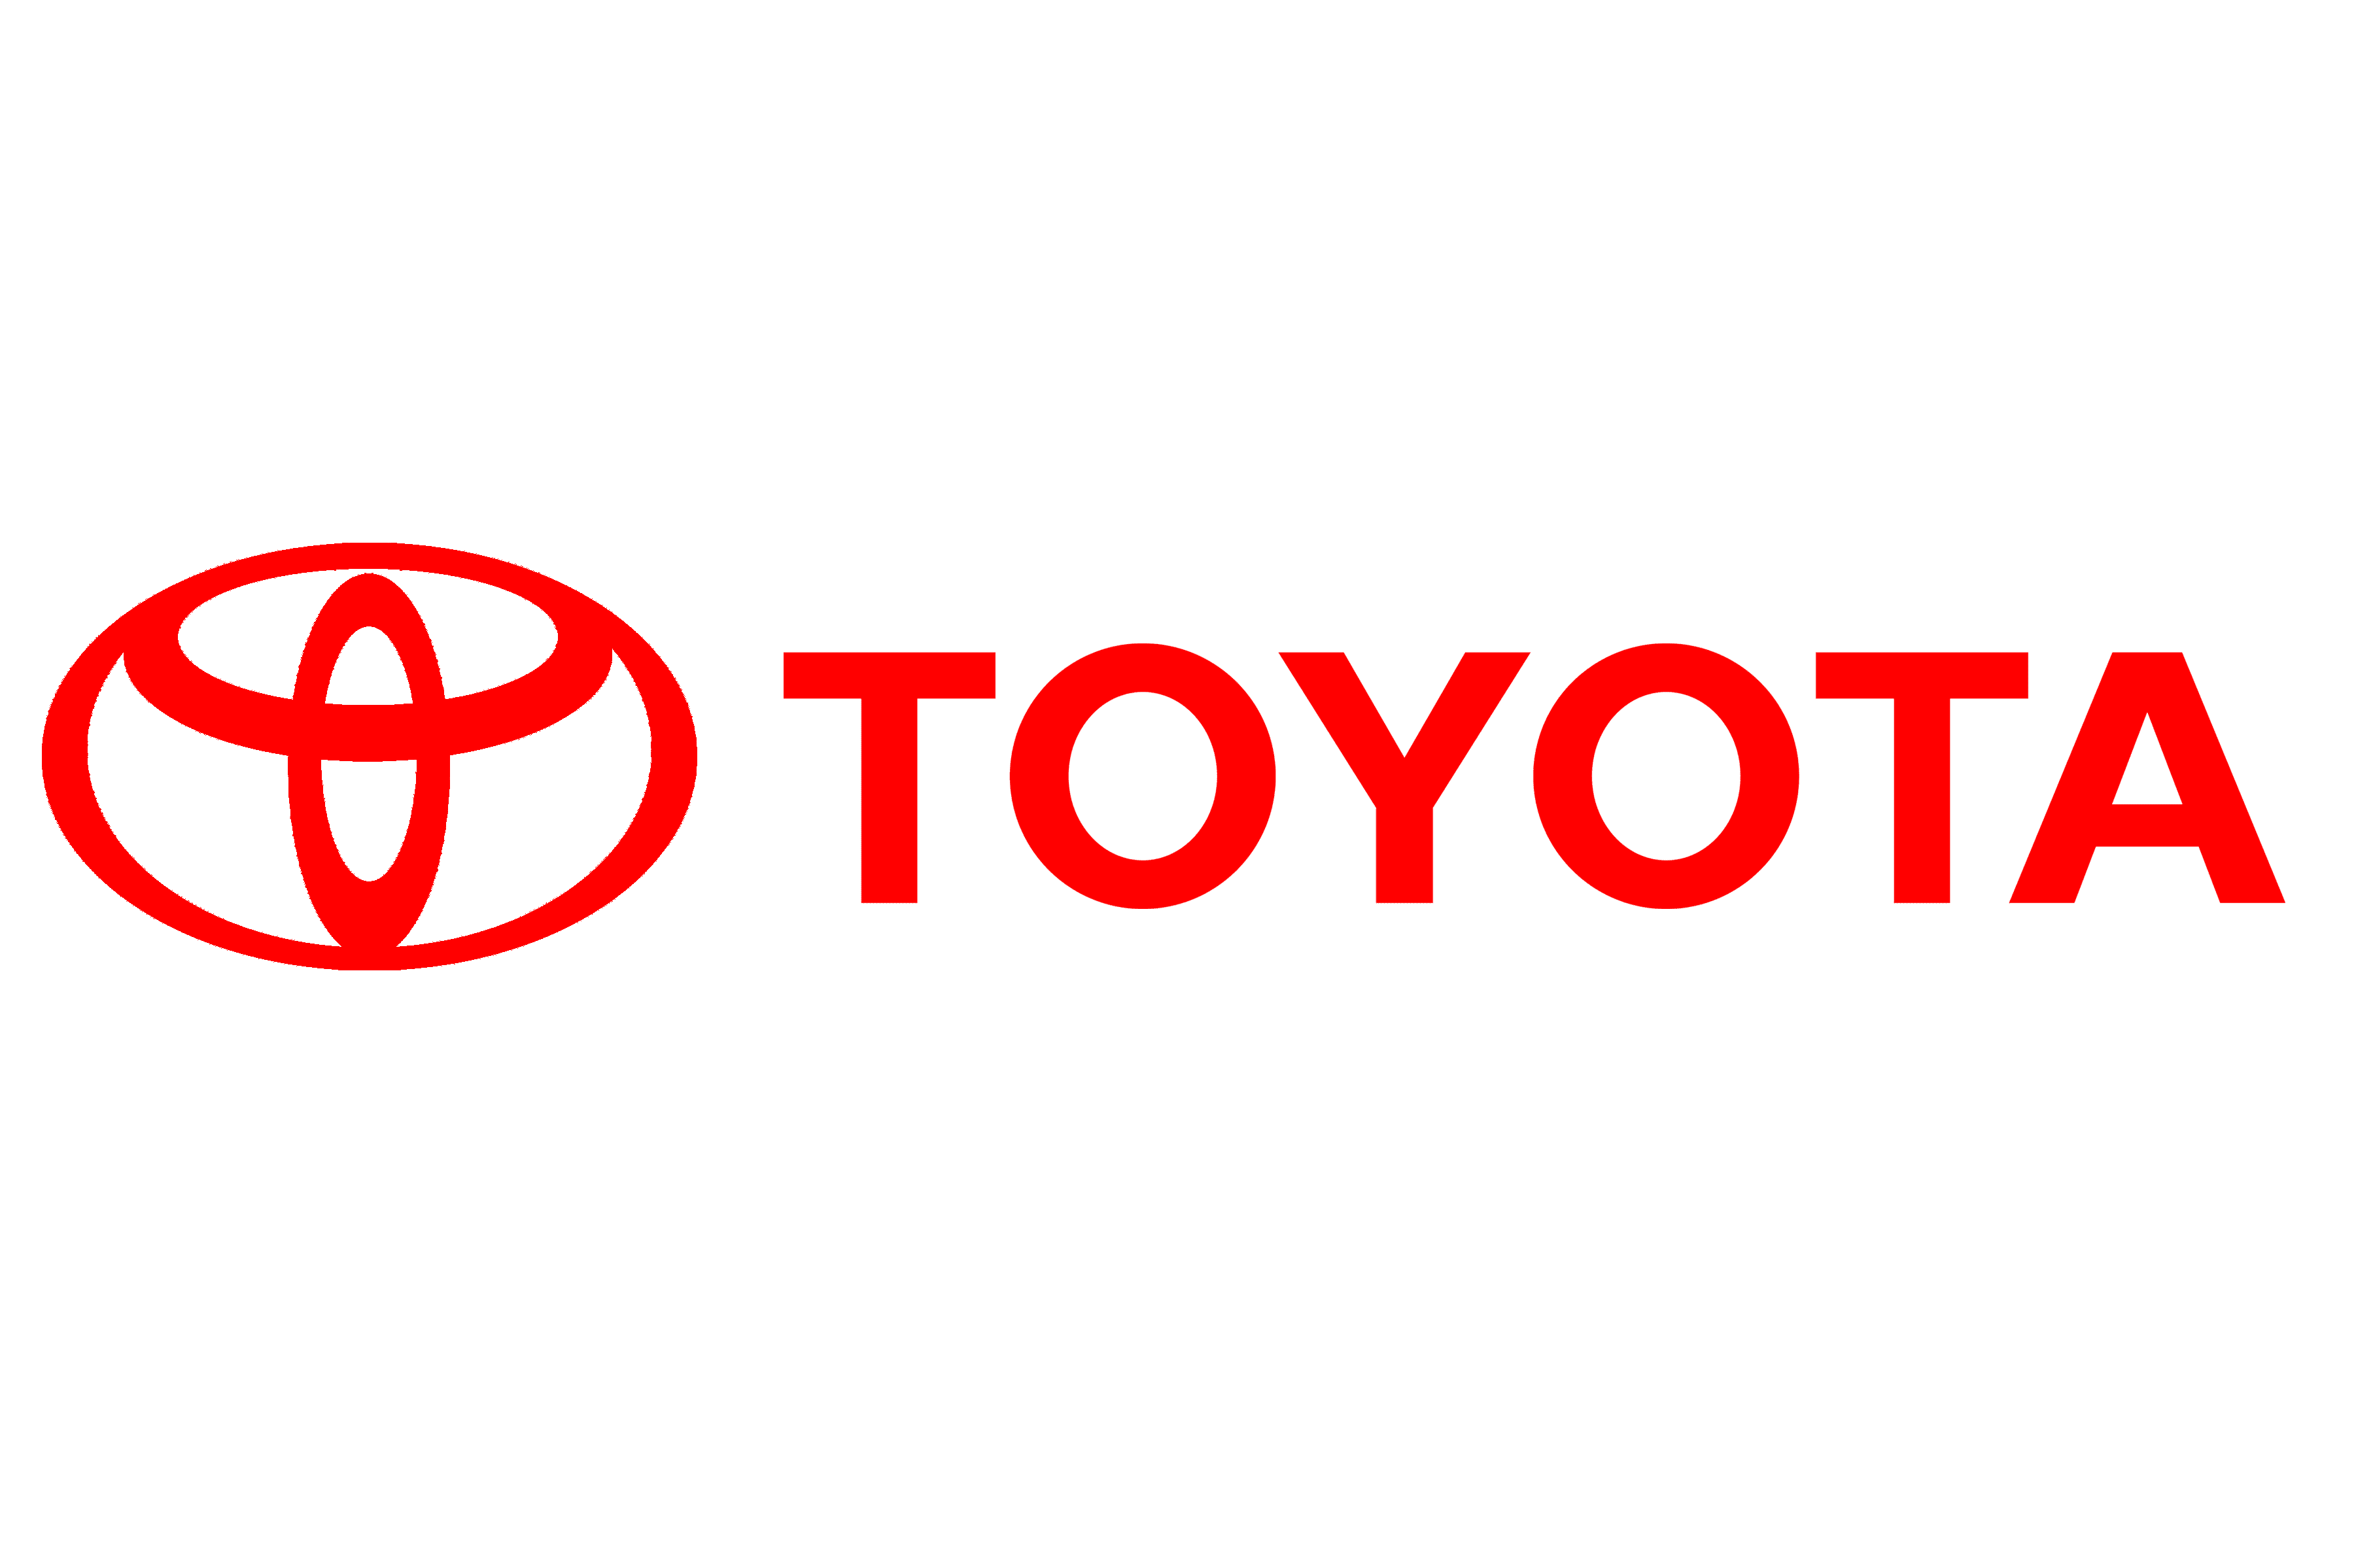 Font Toyota logo